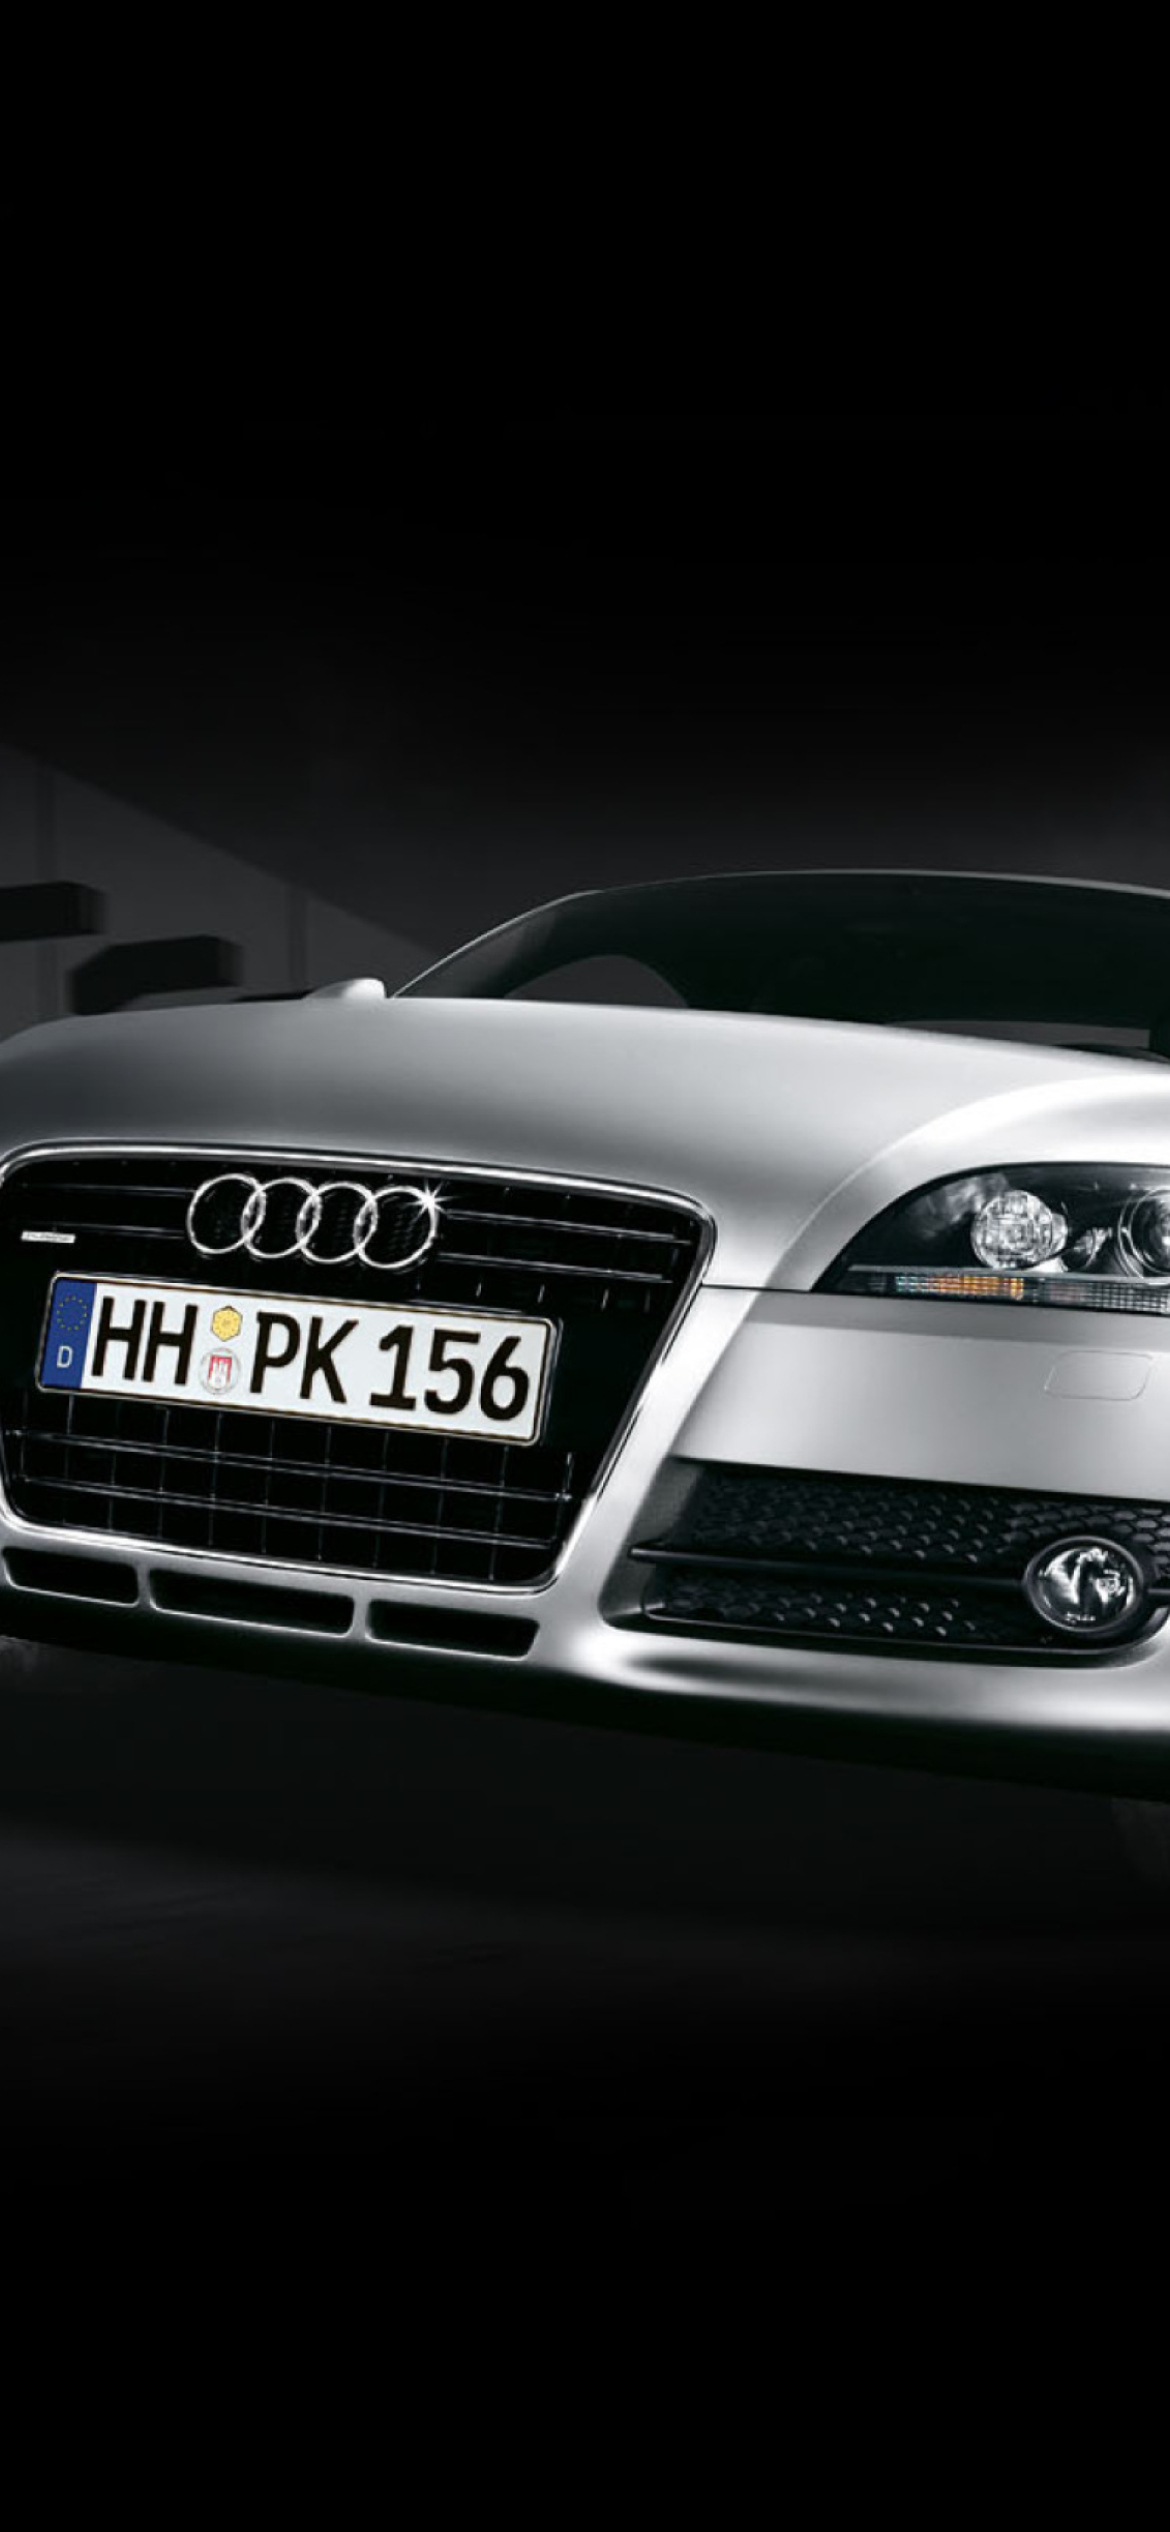 Carro Audi - Fondos de pantalla gratis para iPhone XR